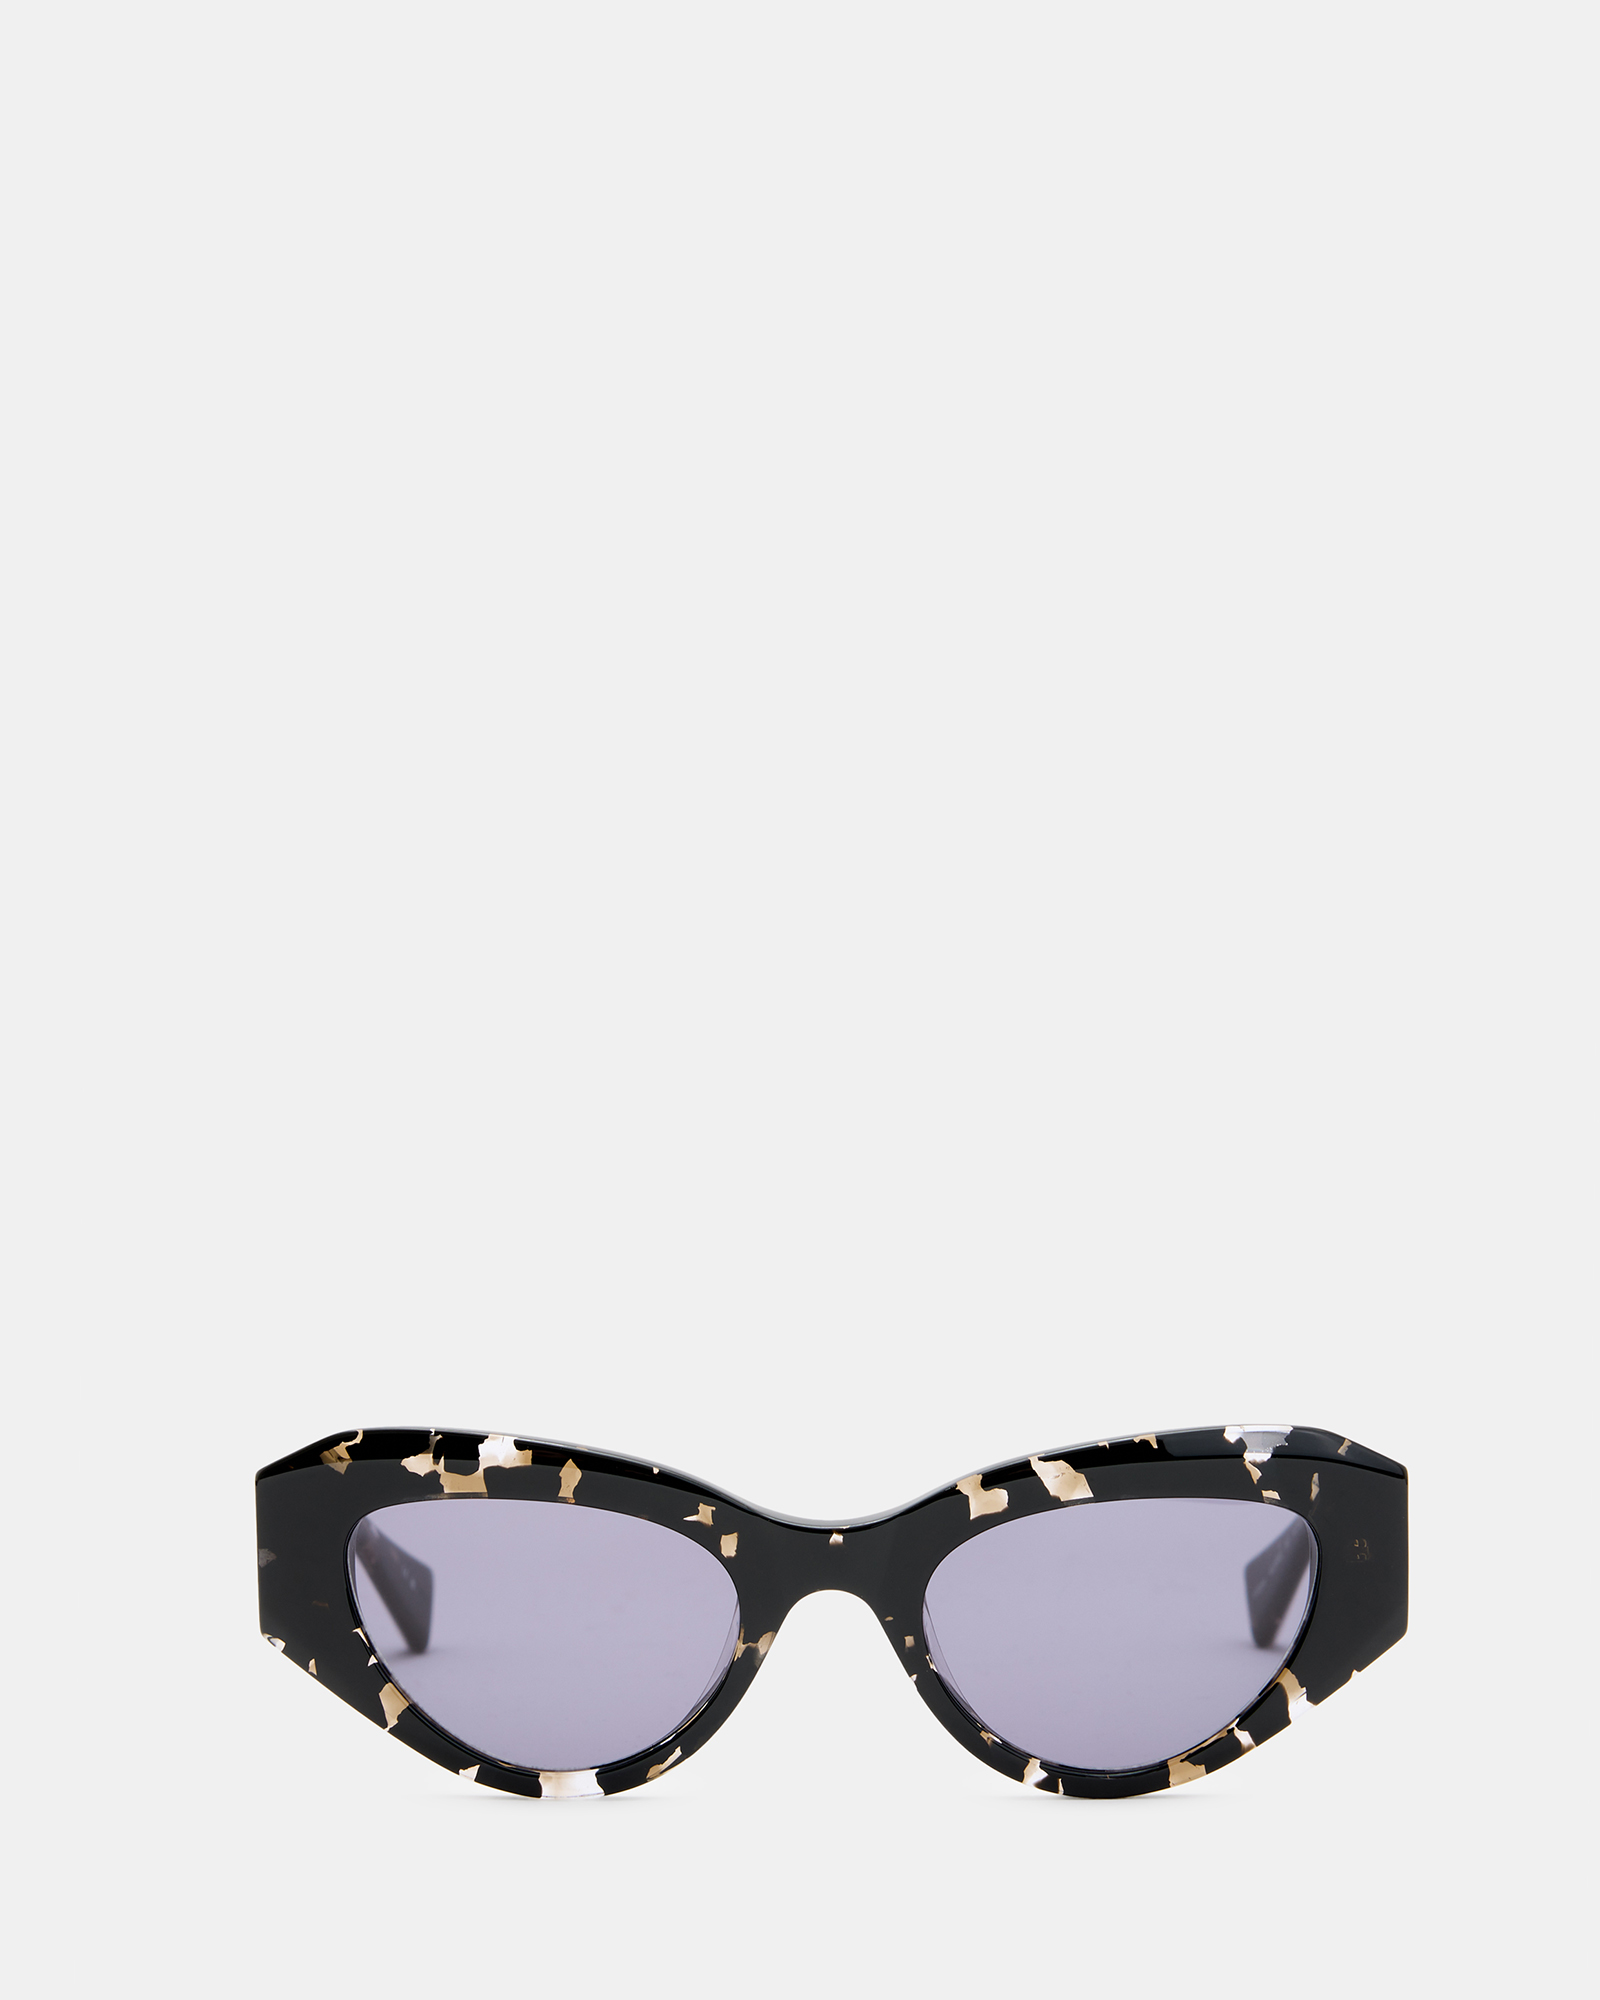 AllSaints Calypso Bevelled Cat Eye Sunglasses,, BLACK TORT